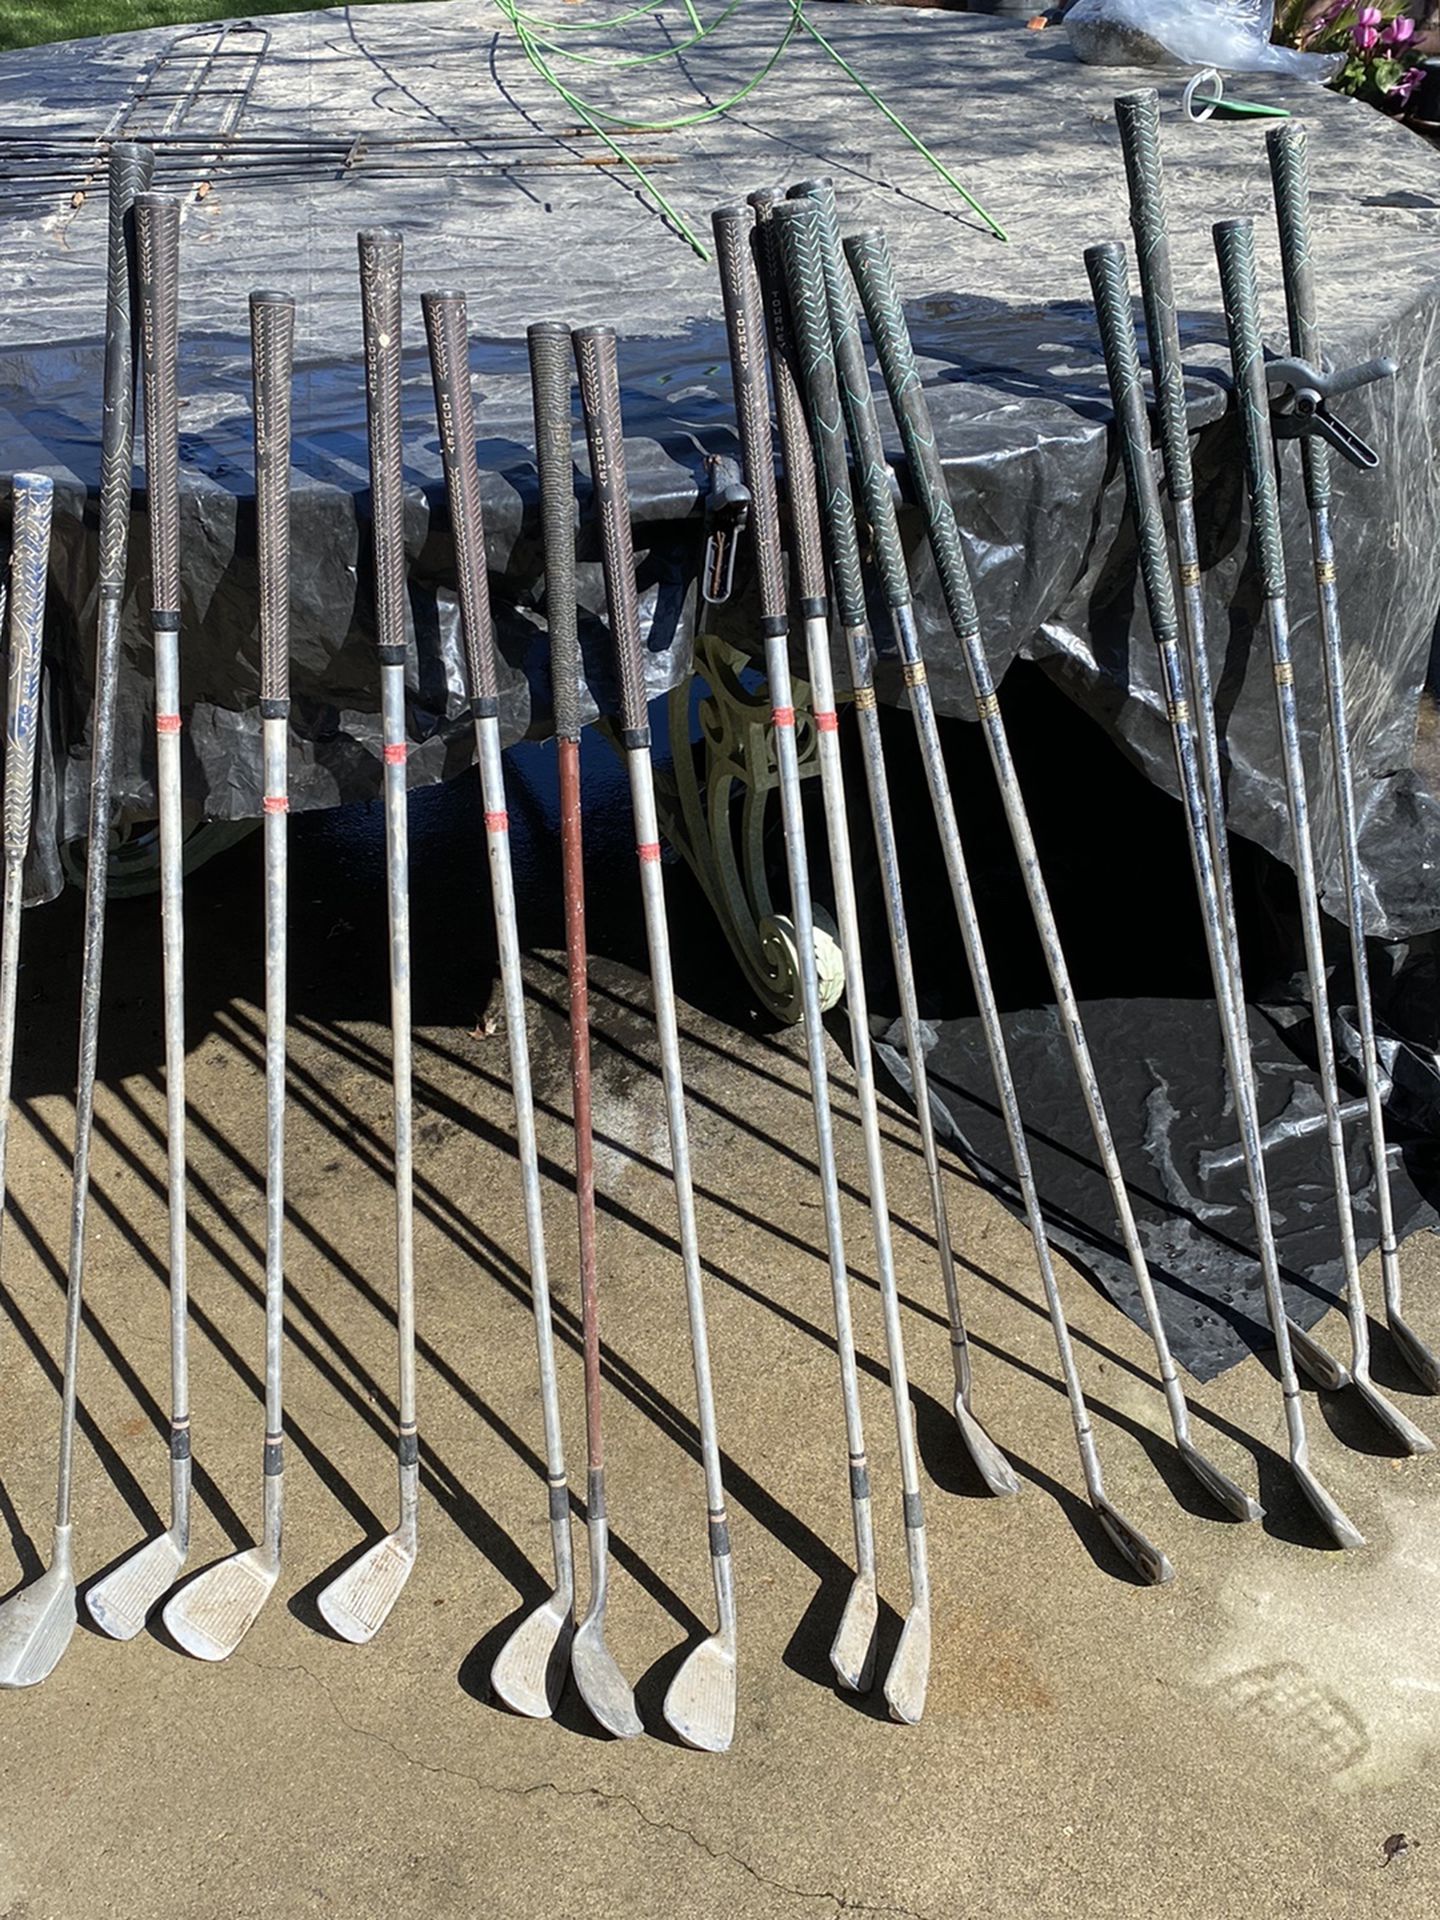 18 Different Irons Golf Clubs( Wilson , Tourney, Swing Rite Brands) $10 Each